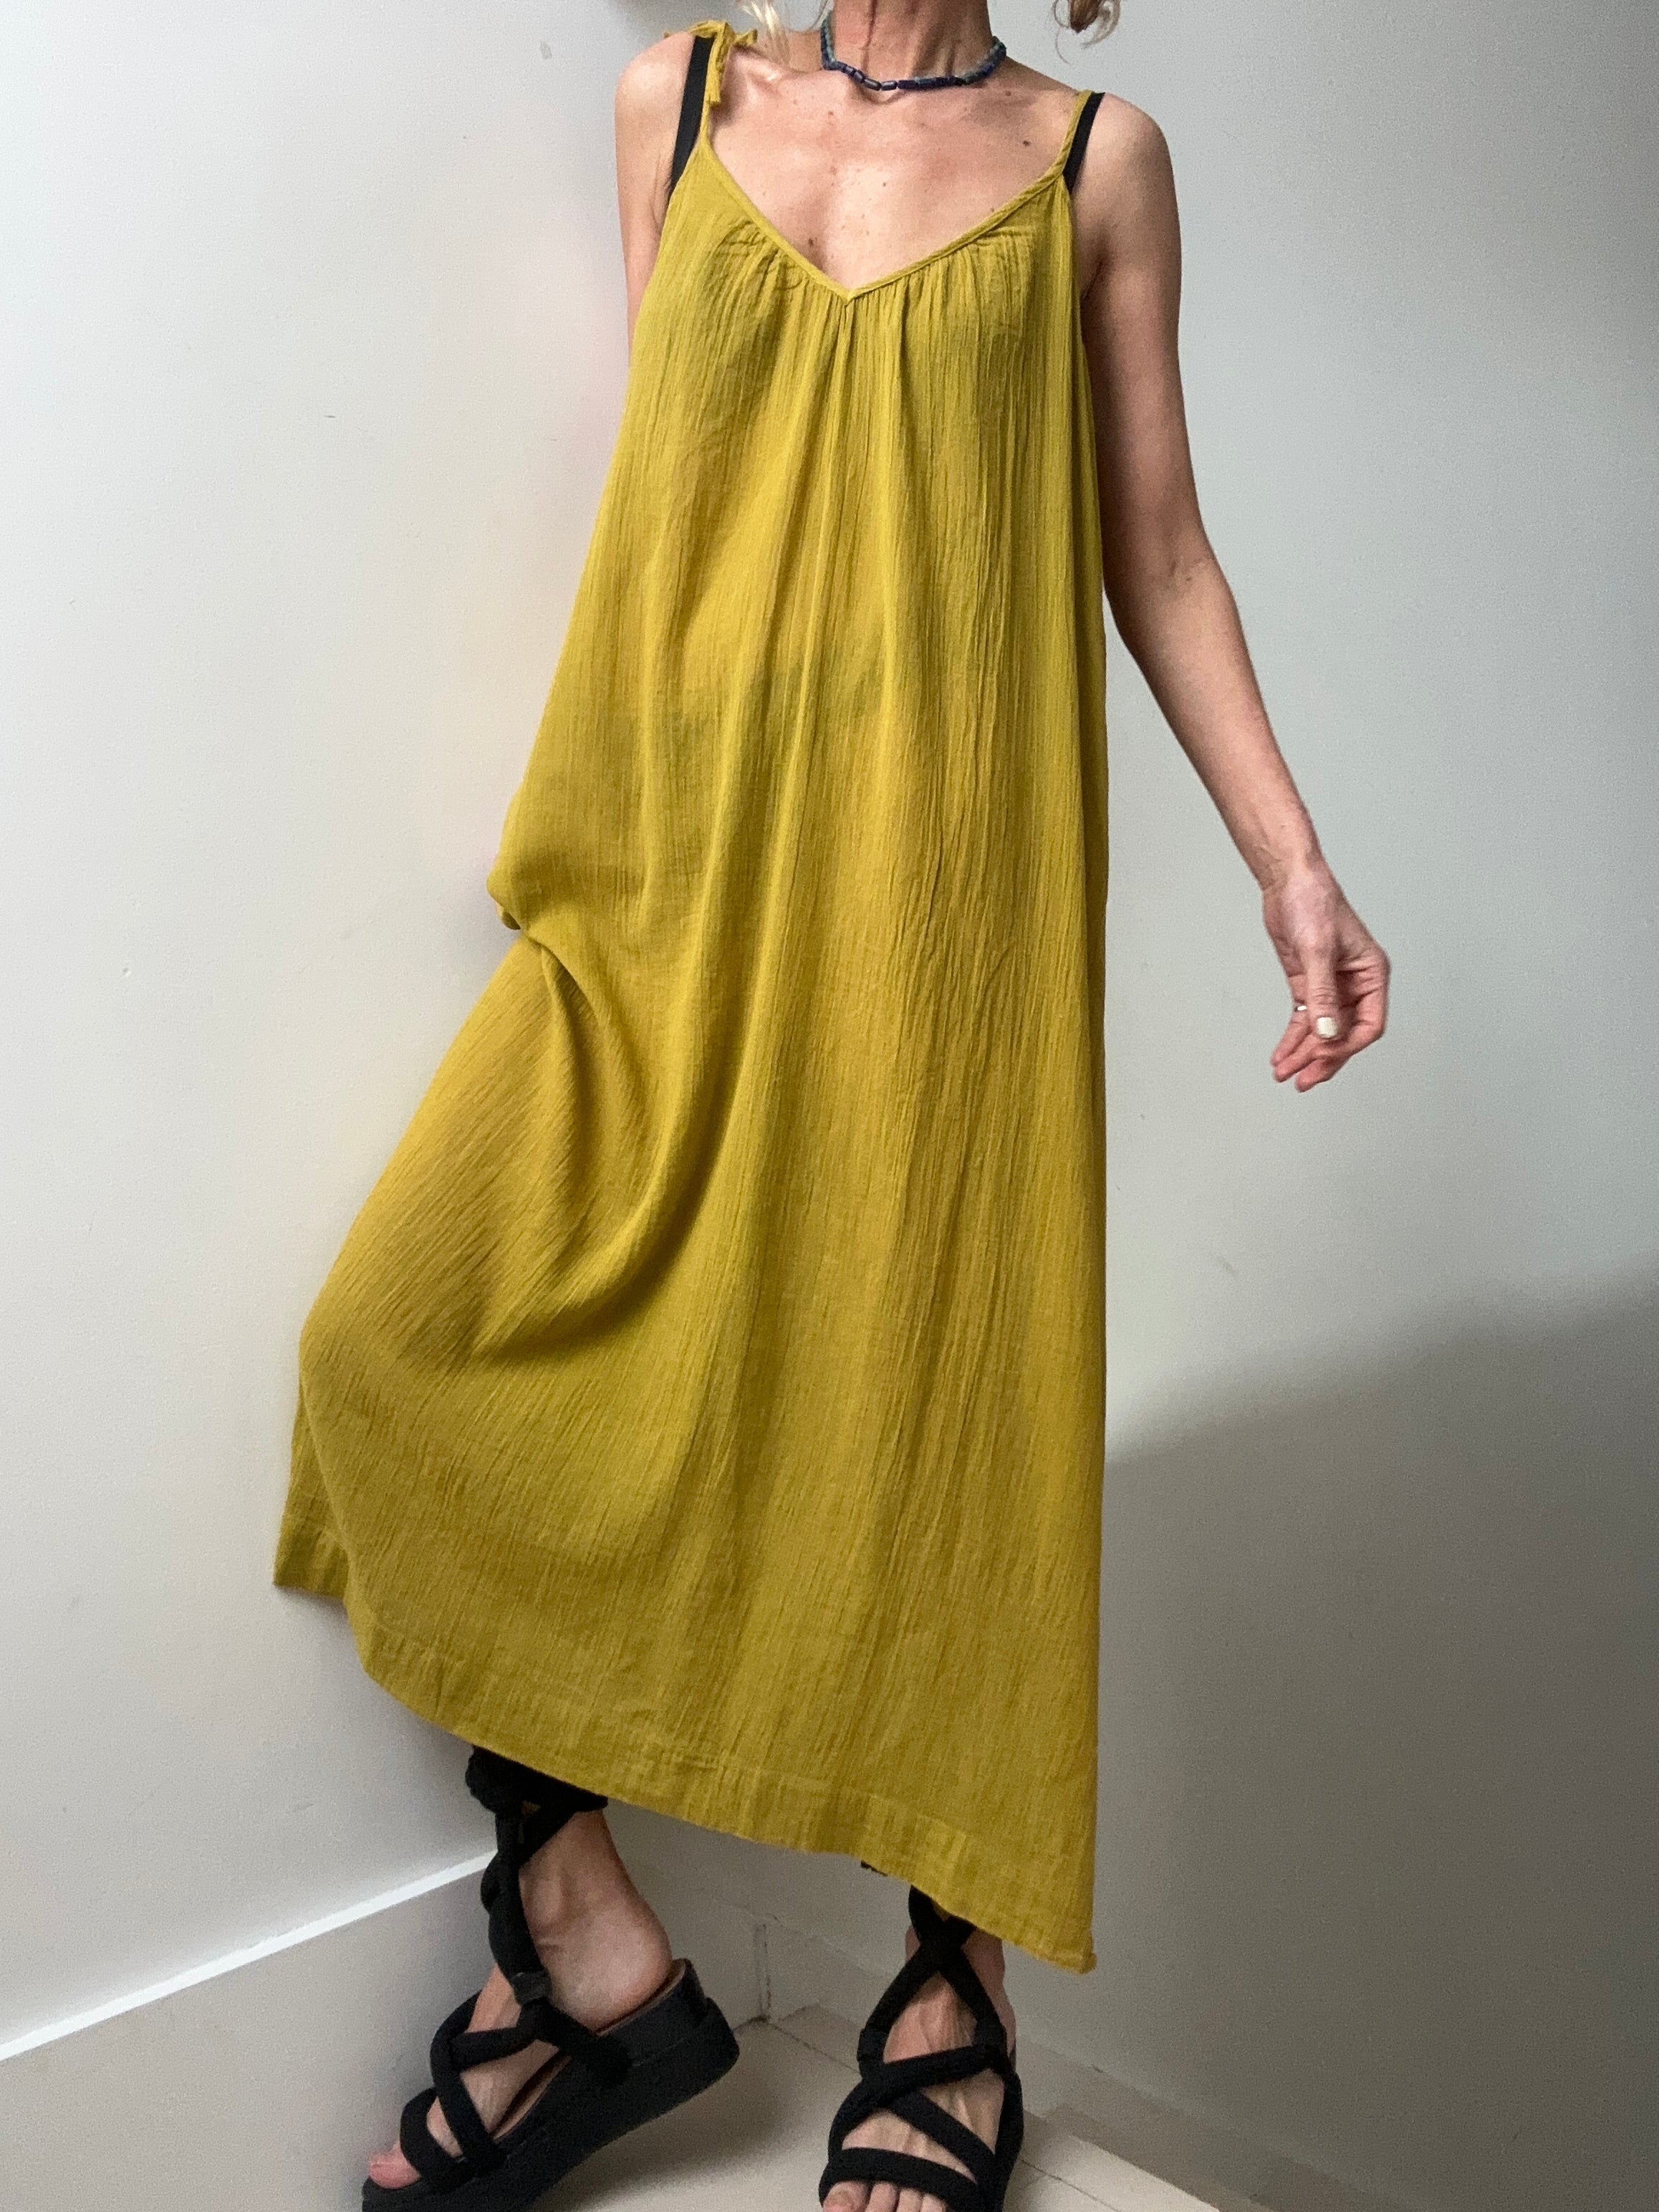 Jetsetbohemian Dresses One Size Tie Strap Cotton Dress in Mustard